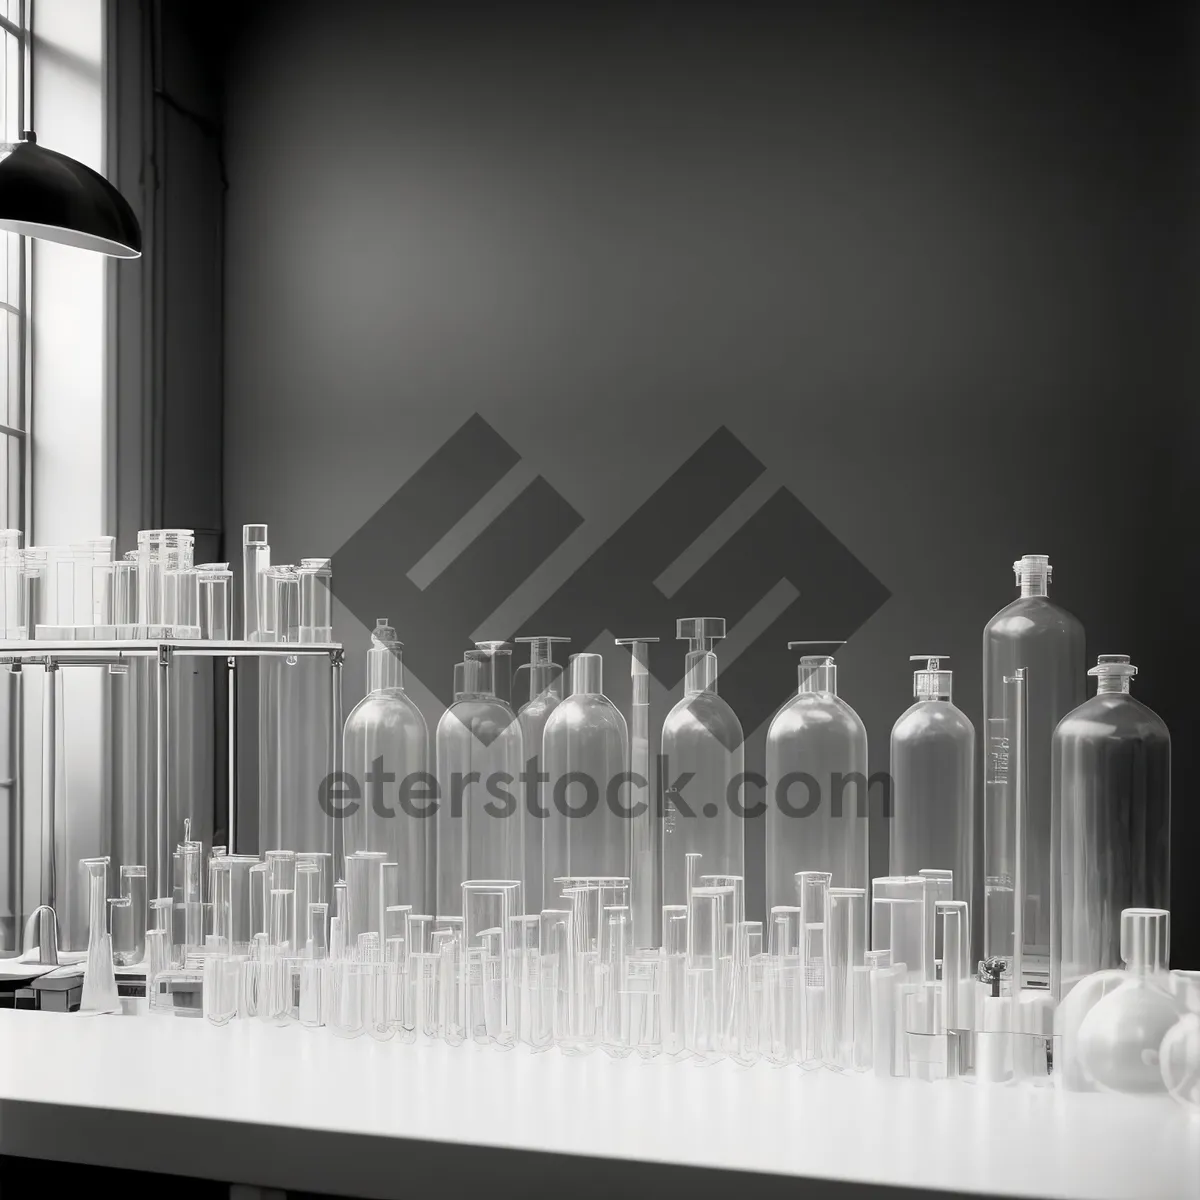 Picture of Scientist Conducting Liquid Experiment in Chemistry Lab